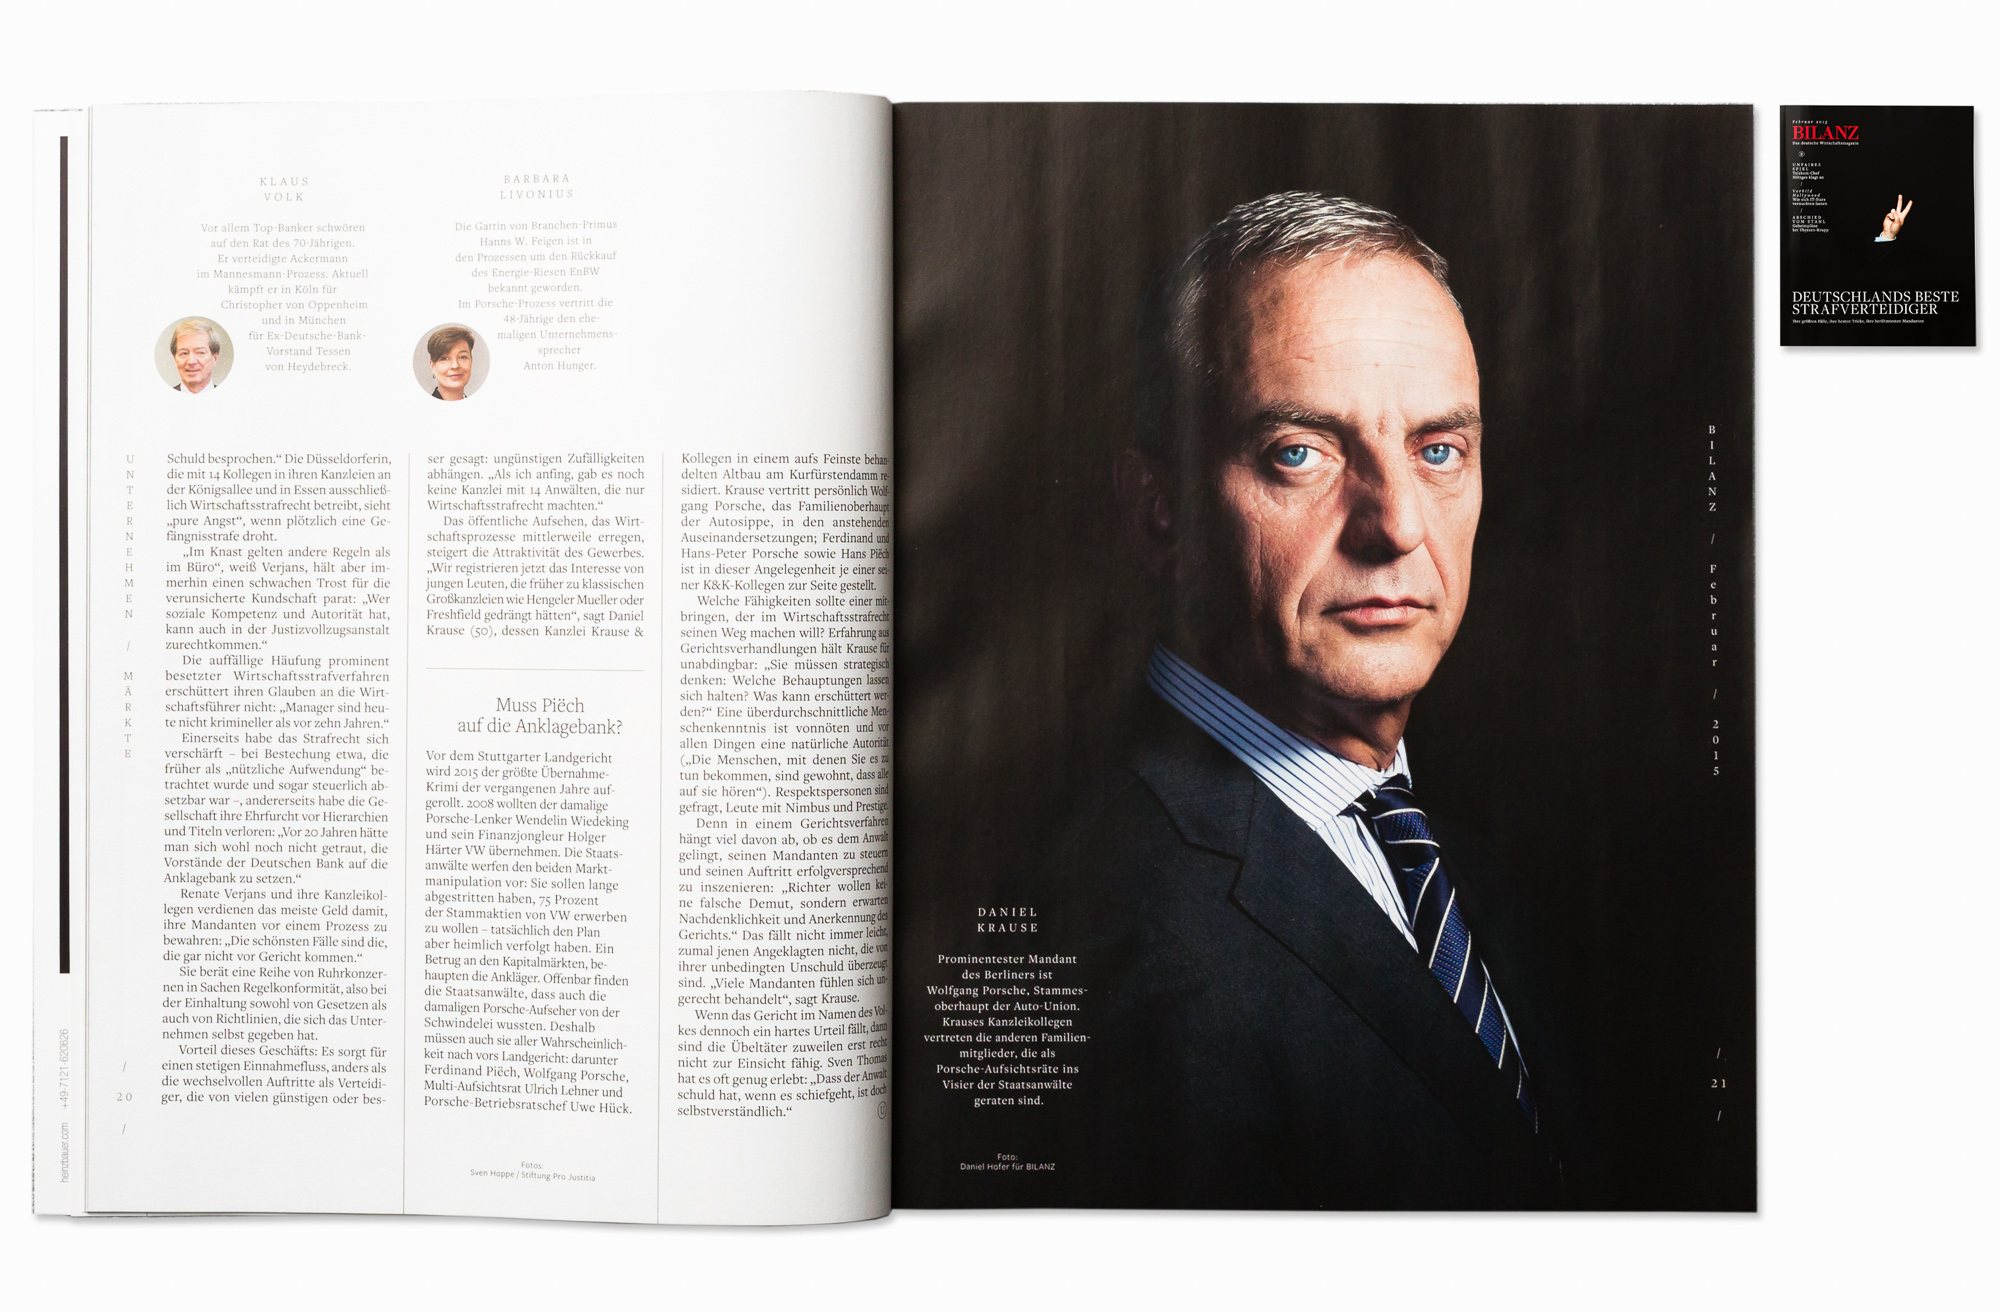   Defense attorney Dr. Daniel Krause for Bilanz Magazine, Berlin 2015  